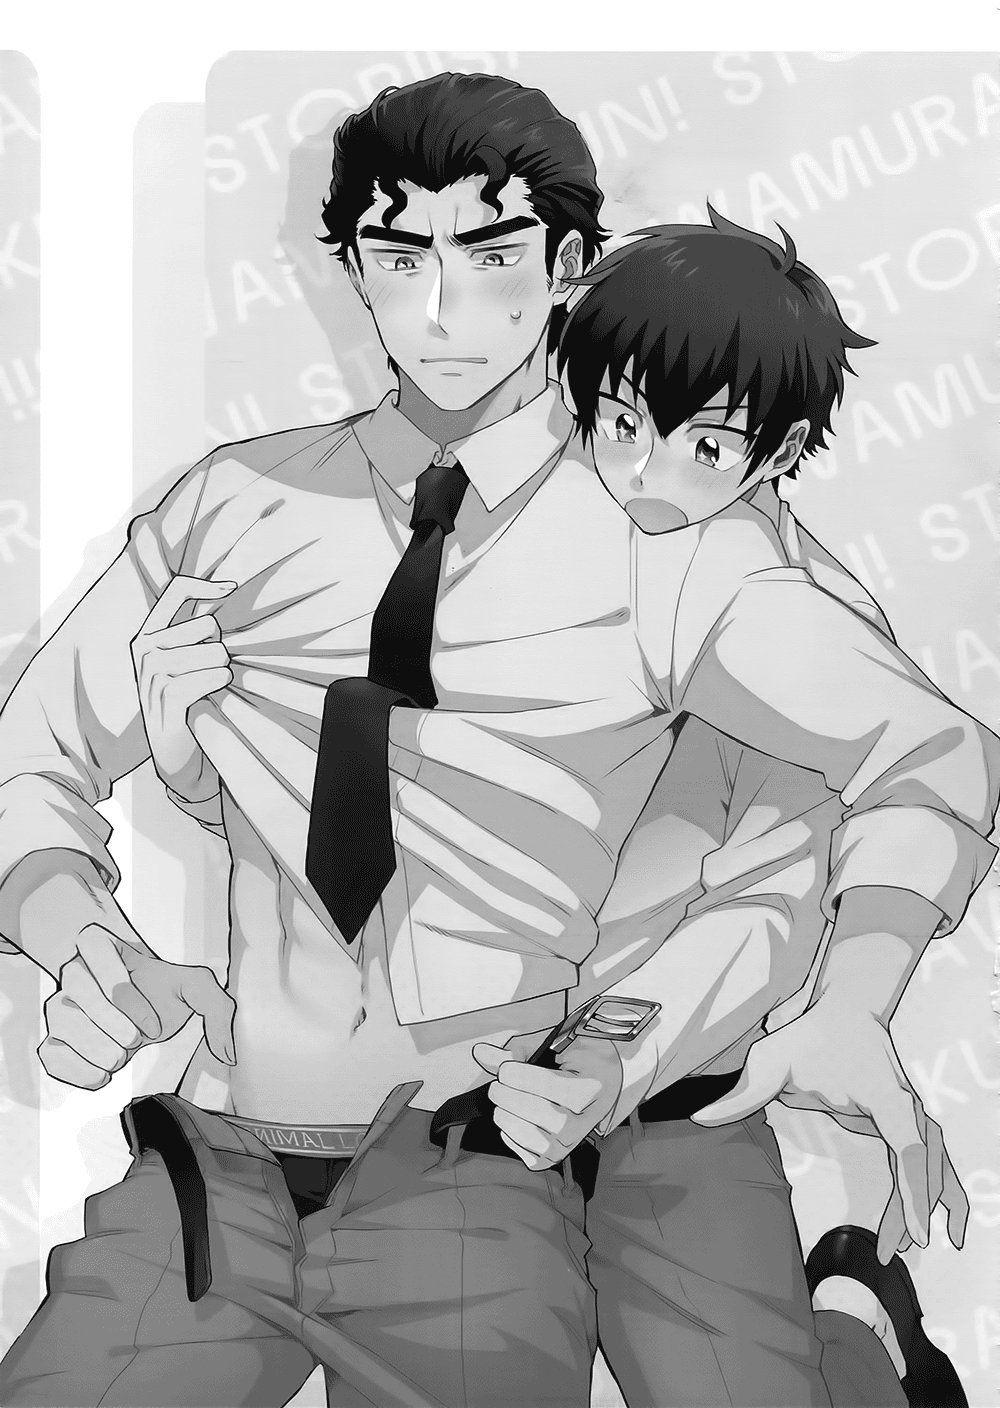 Gaydudes Stop!! Sawamura-kun! - Daiya no ace Kitchen - Page 2